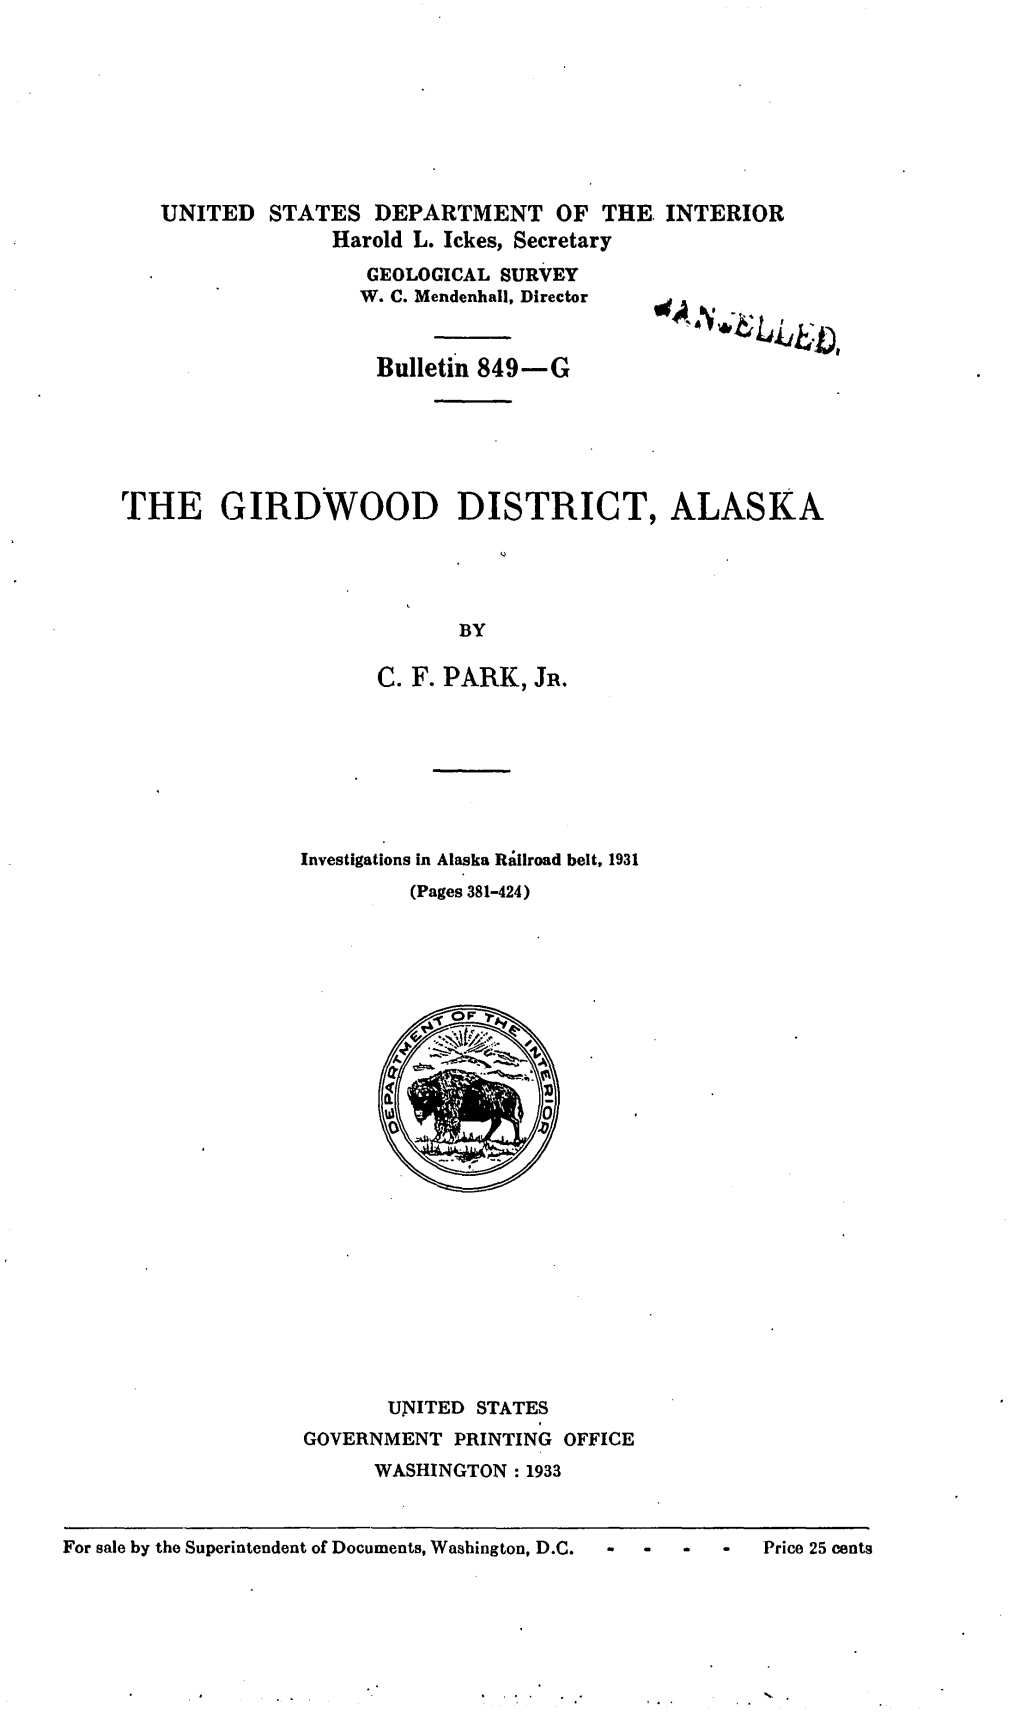 The Girdwood District, Alaska